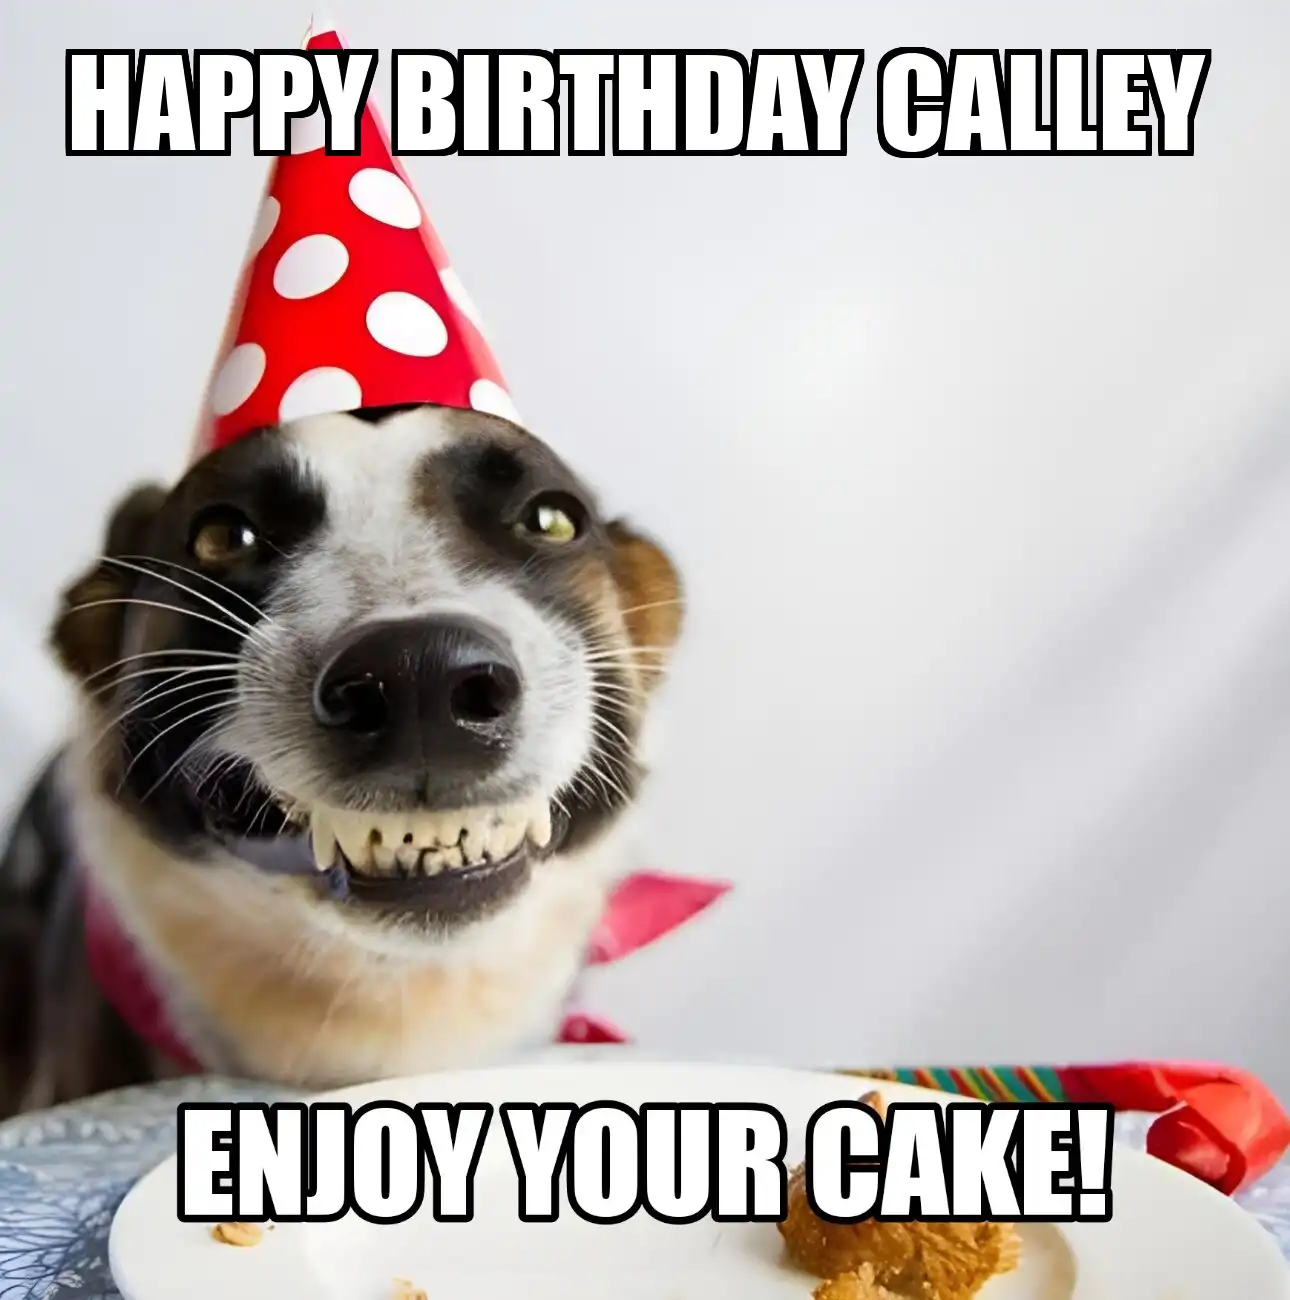 Happy Birthday Calley Enjoy Your Cake Dog Meme